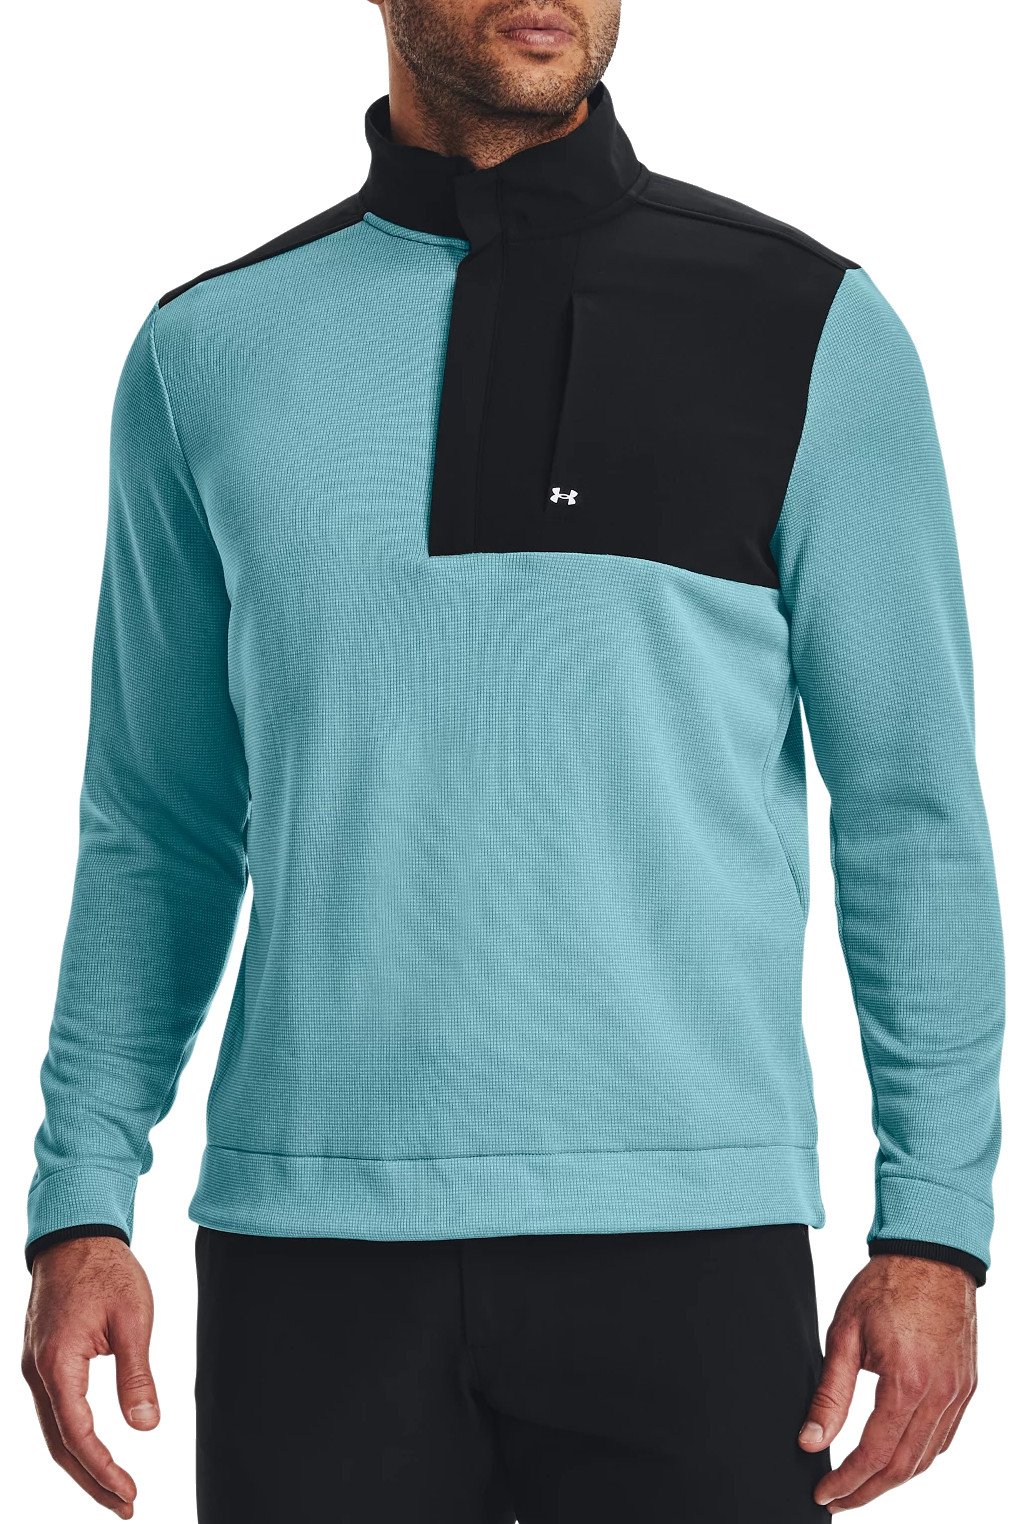 UA Storm SweaterFleece